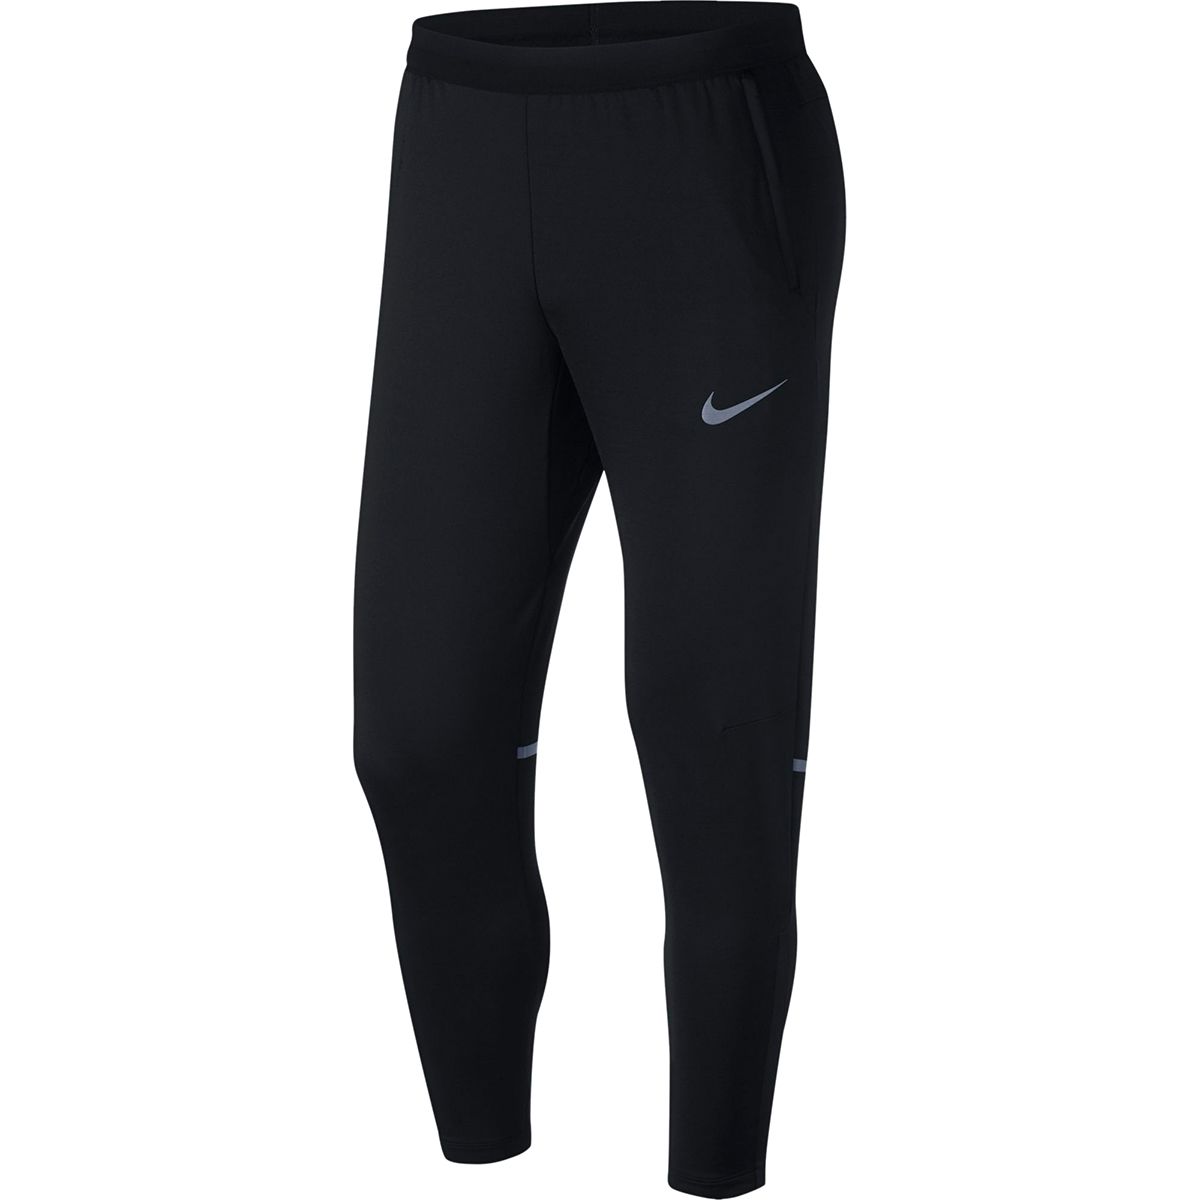 Nike Phenom 2 Pant - Men's - Clothing